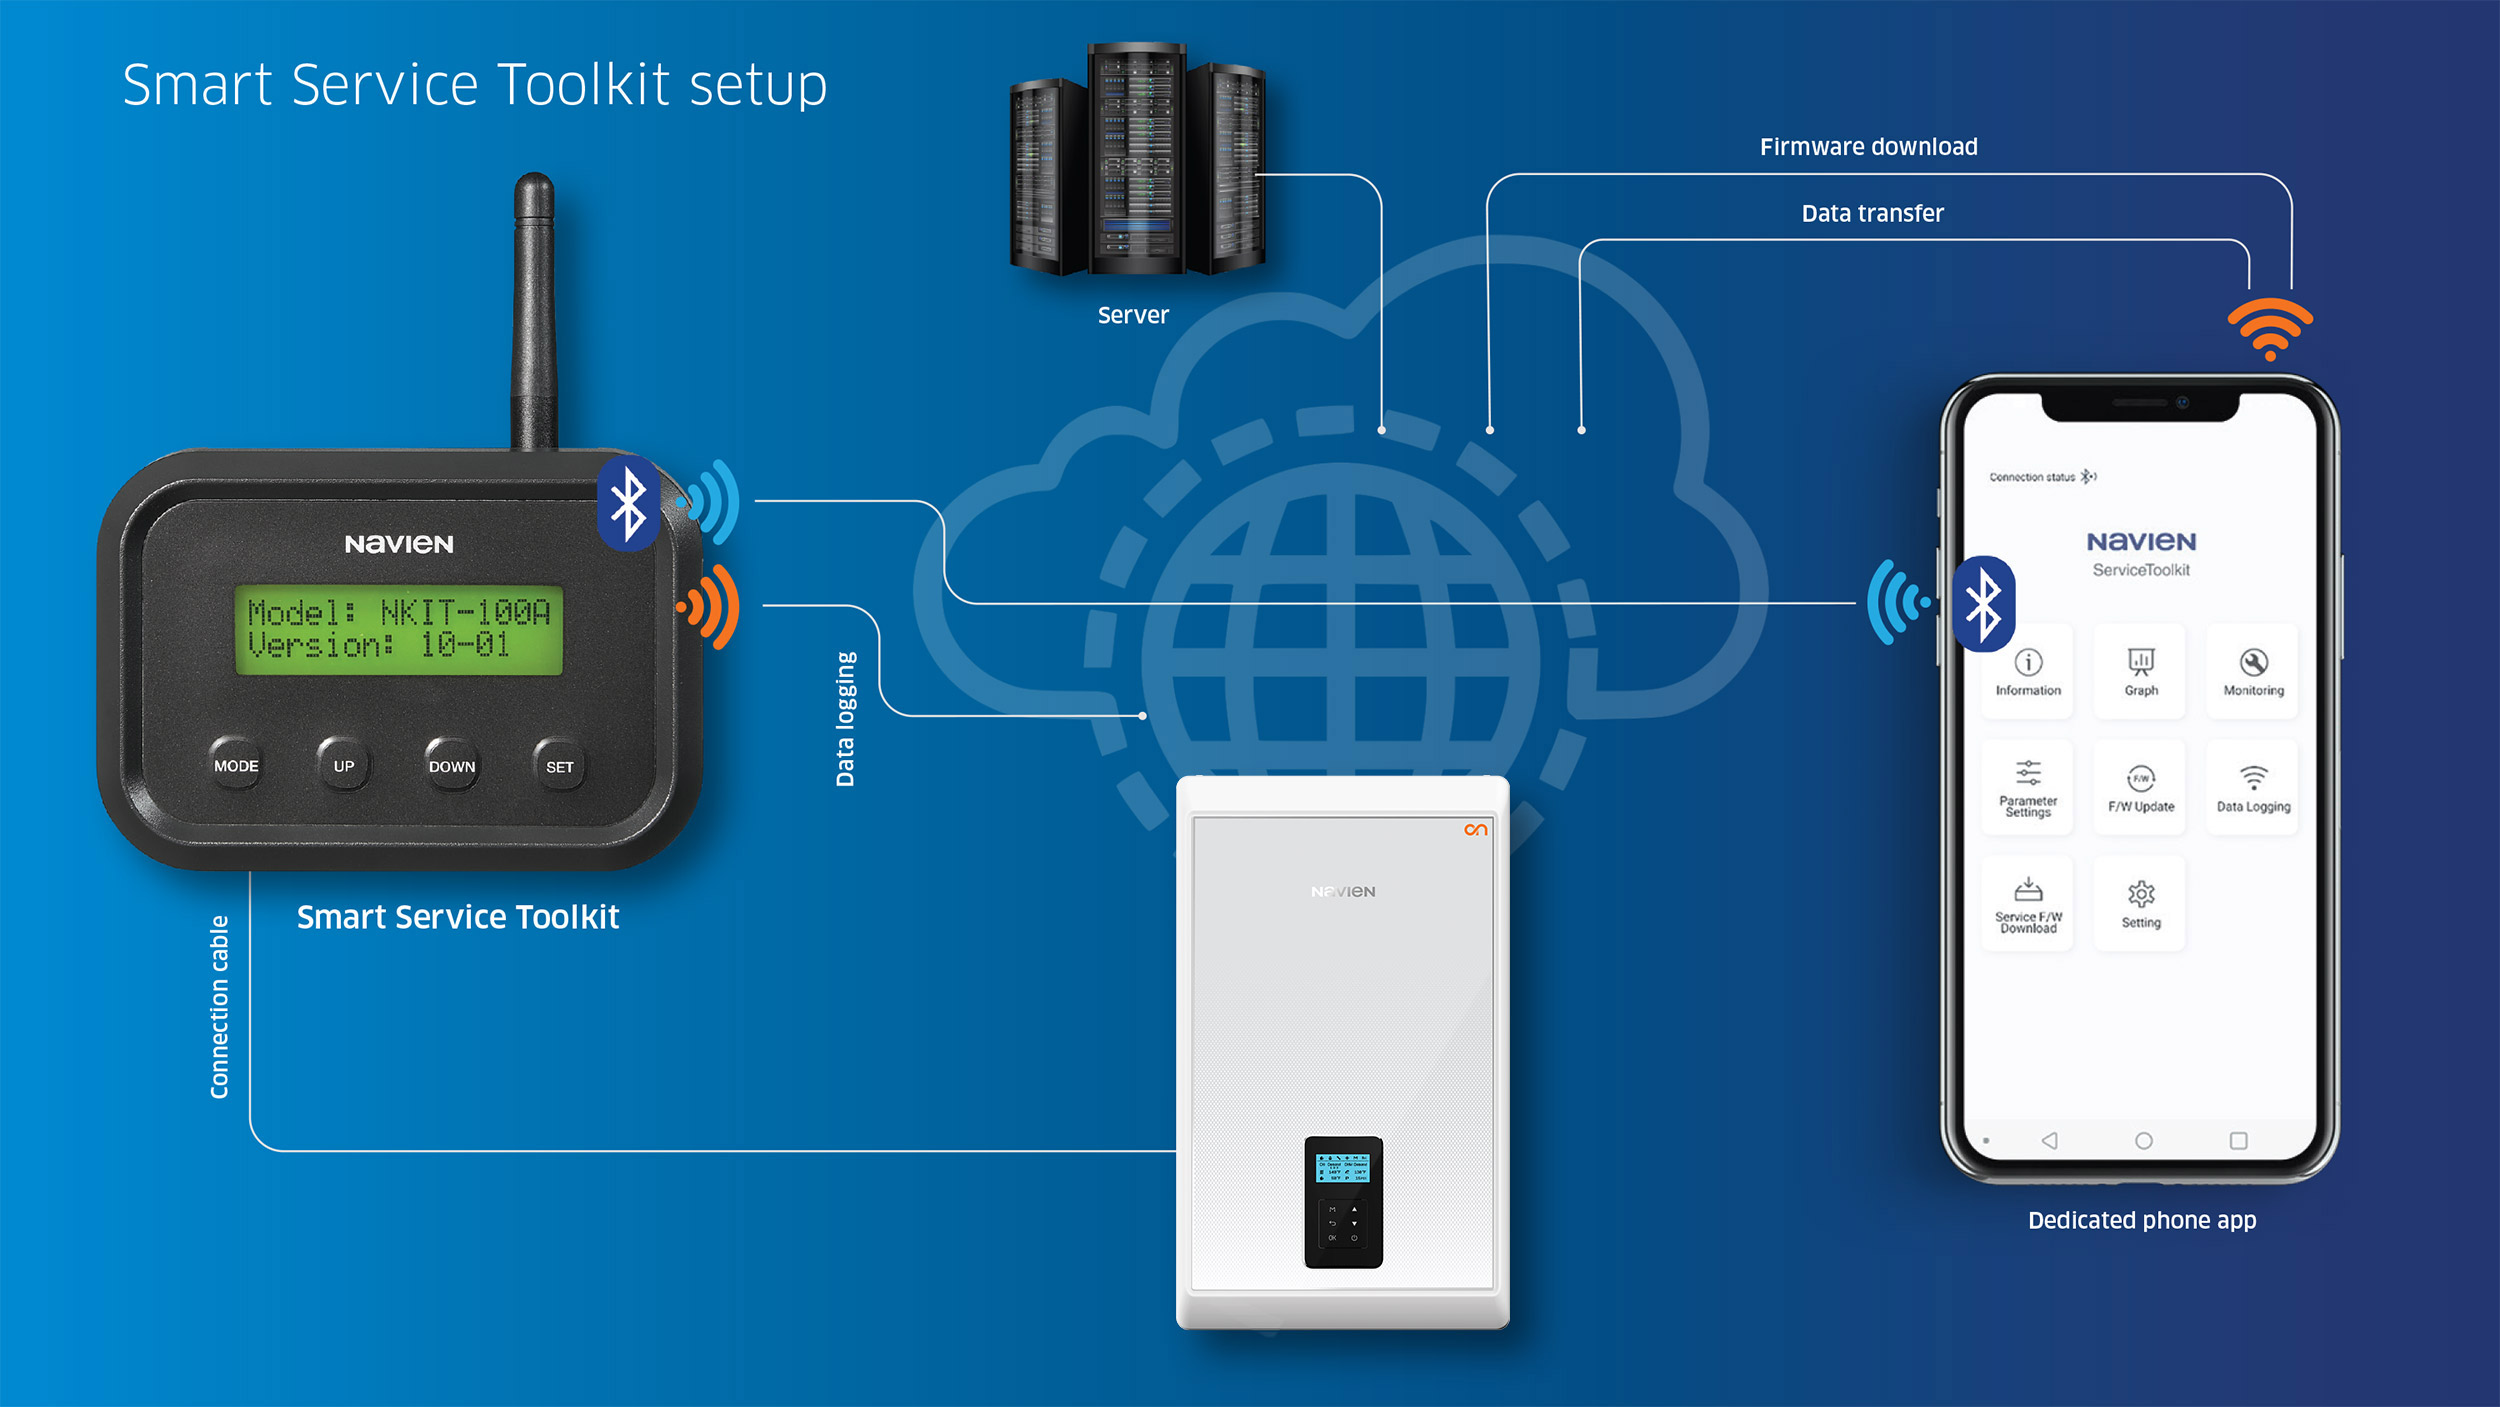 Navien Smart Service Toolkit setup